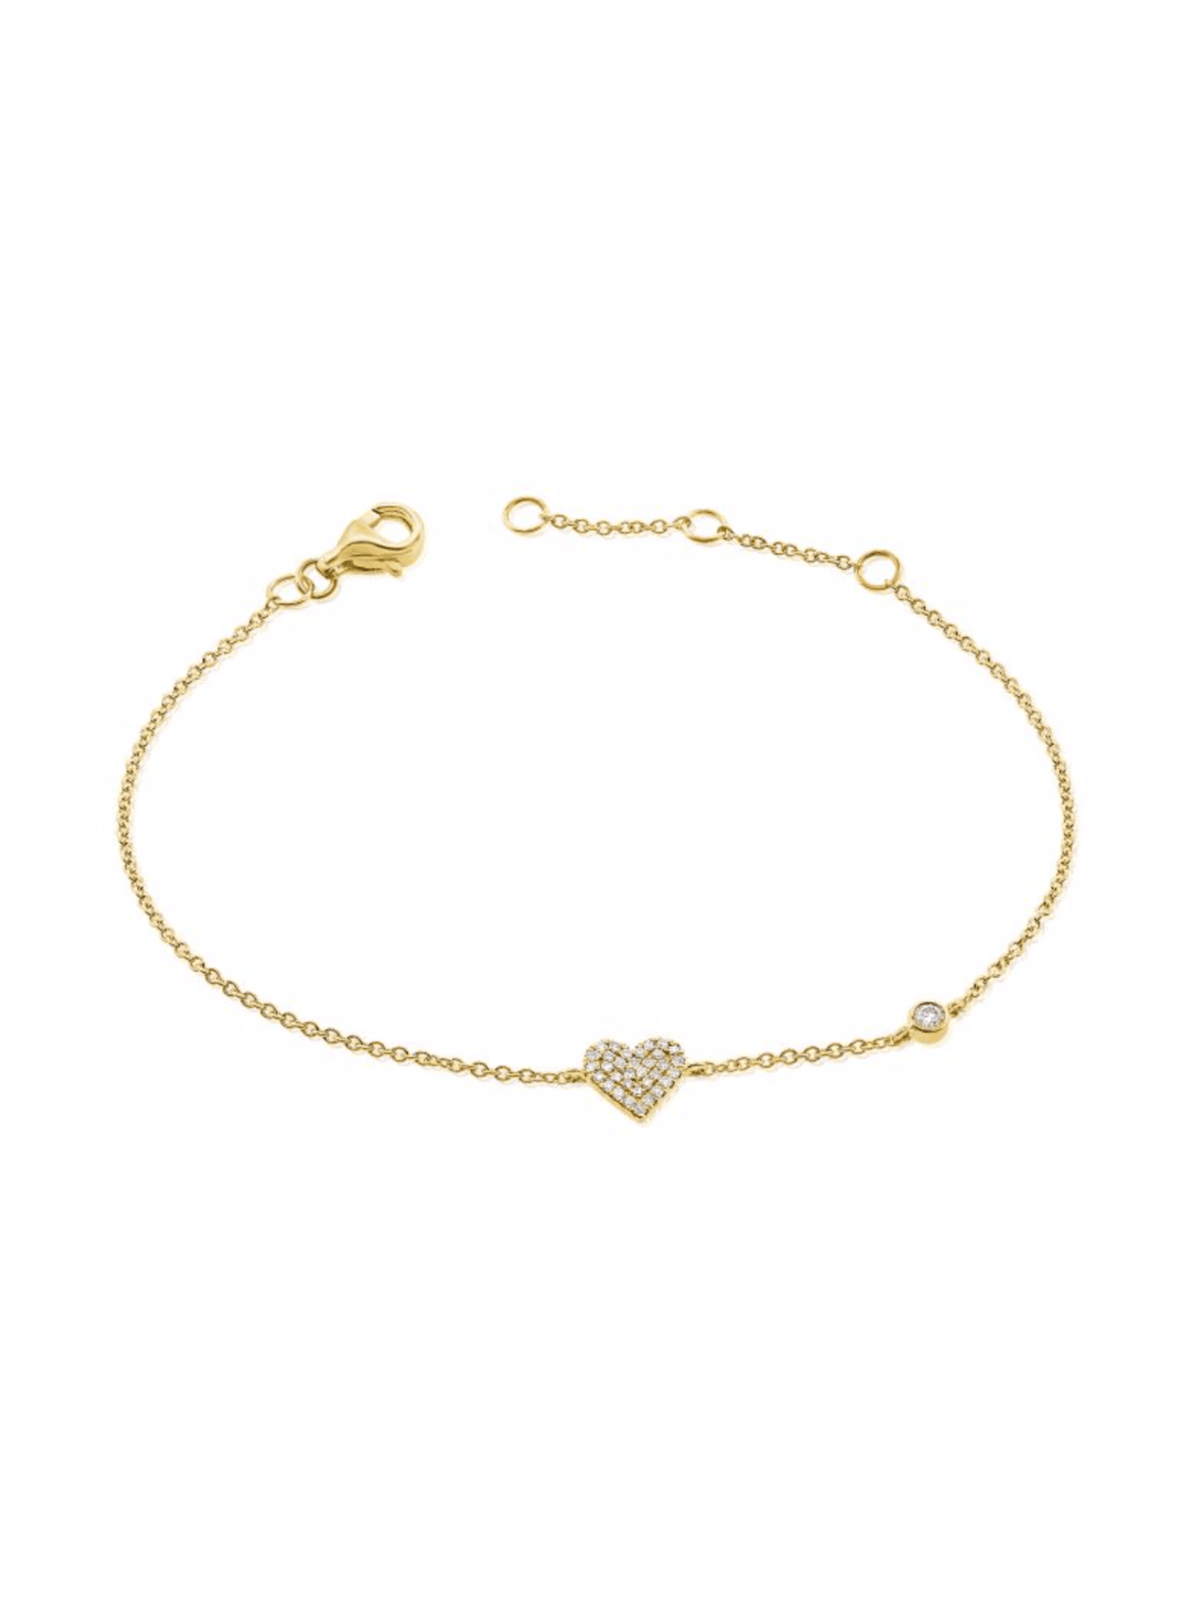 yellow gold diamond pave heart stationed bracelet with a bezel diamond on white background